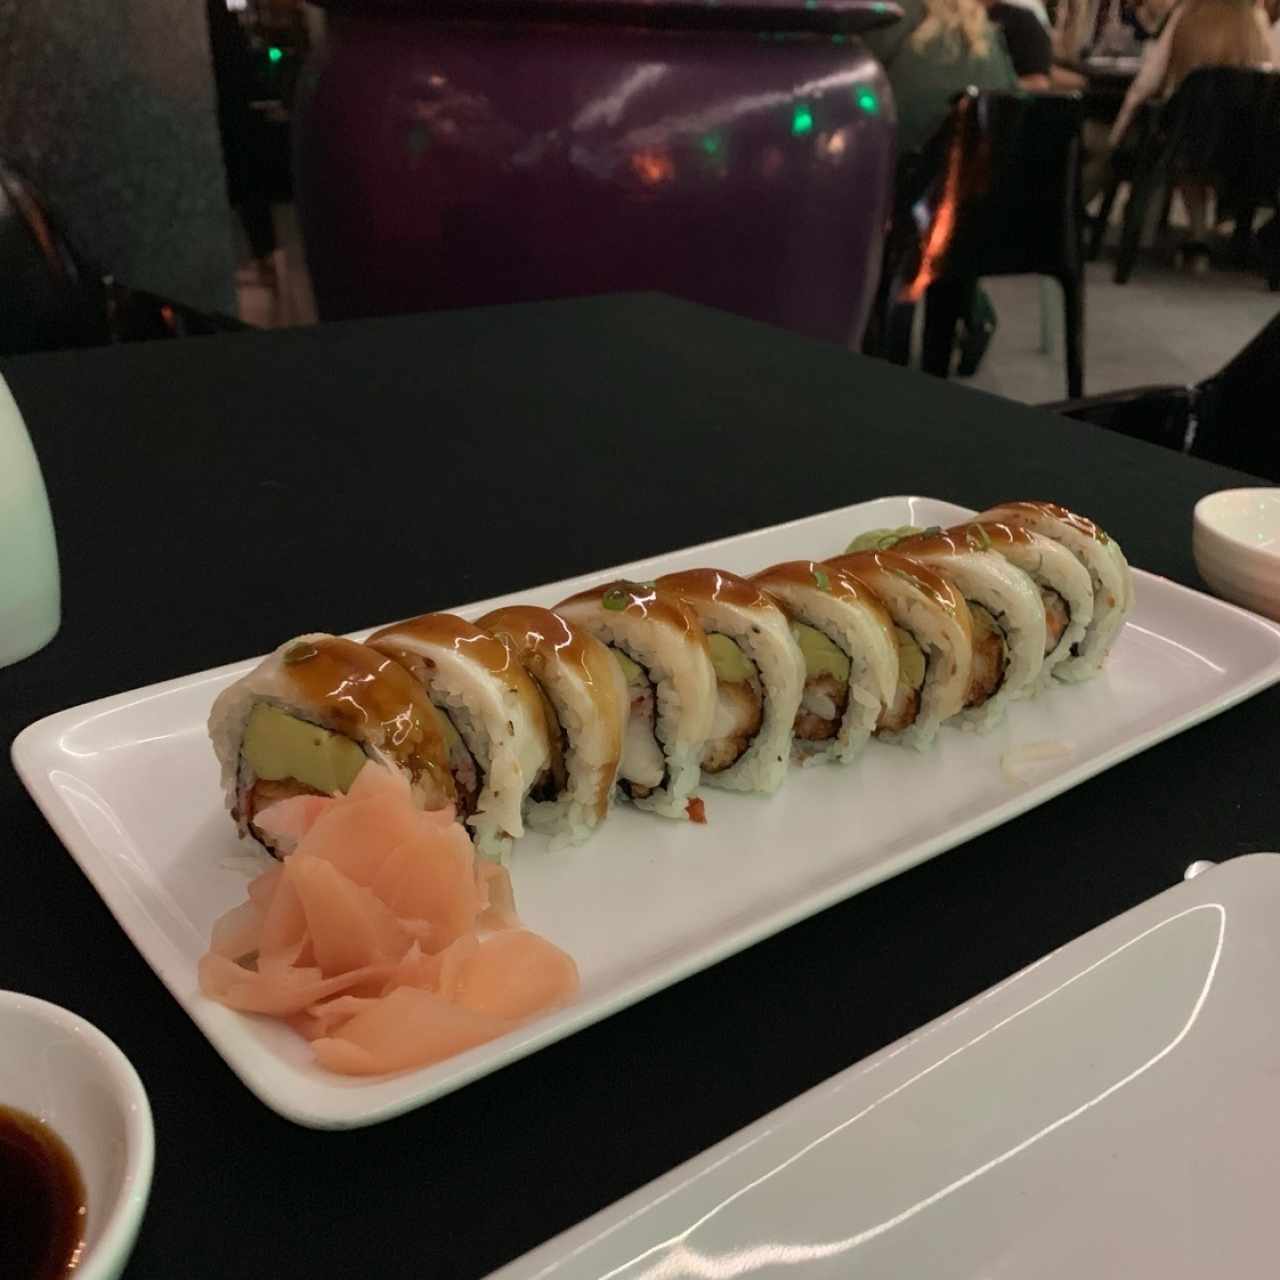 Sushi rolls/Makis - Black roll